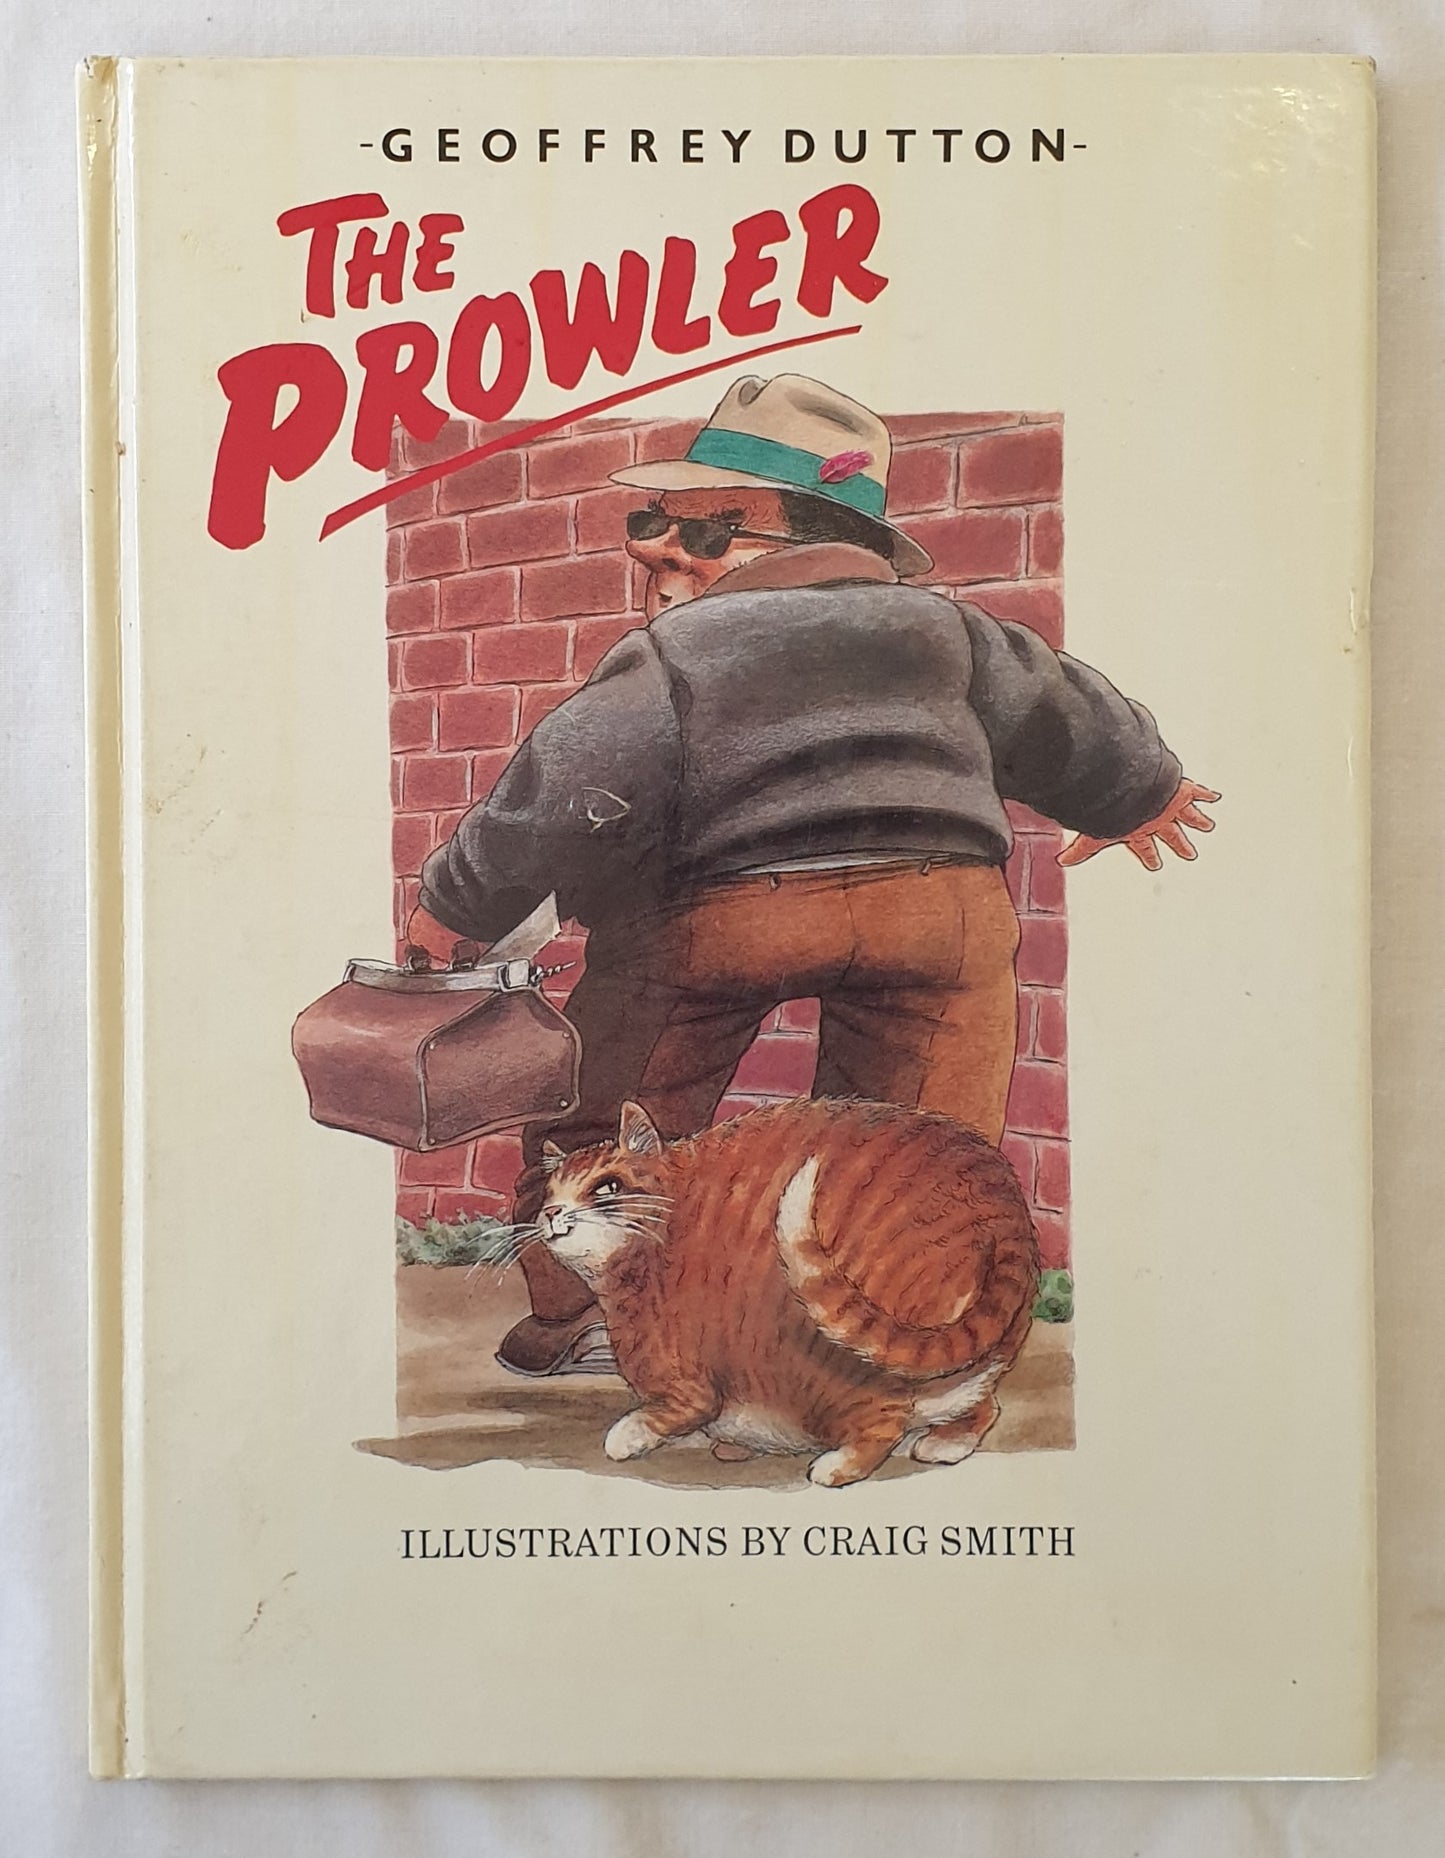 The Prowler by Geoffrey Dutton